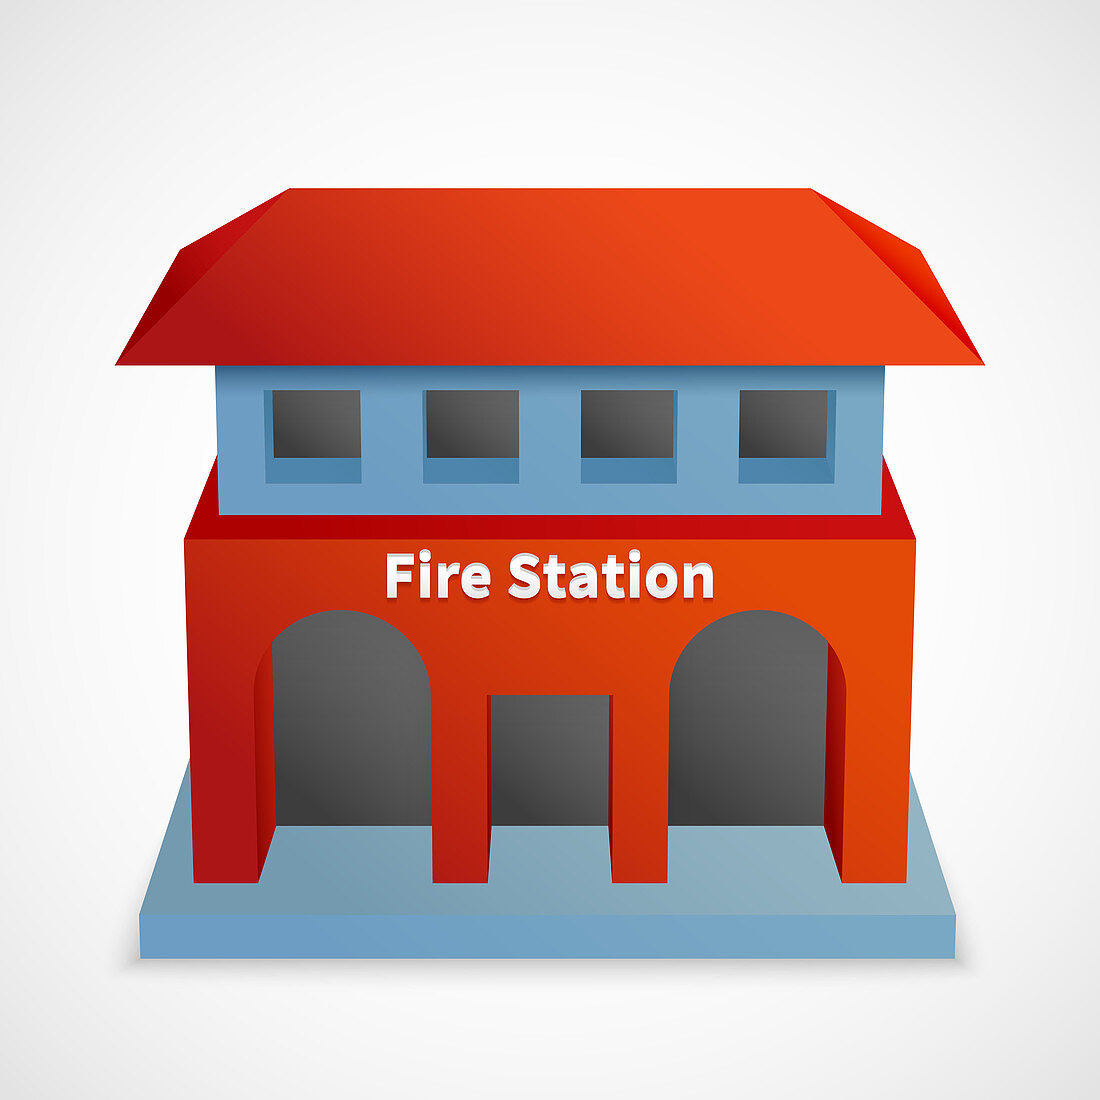 Fire station, illustration